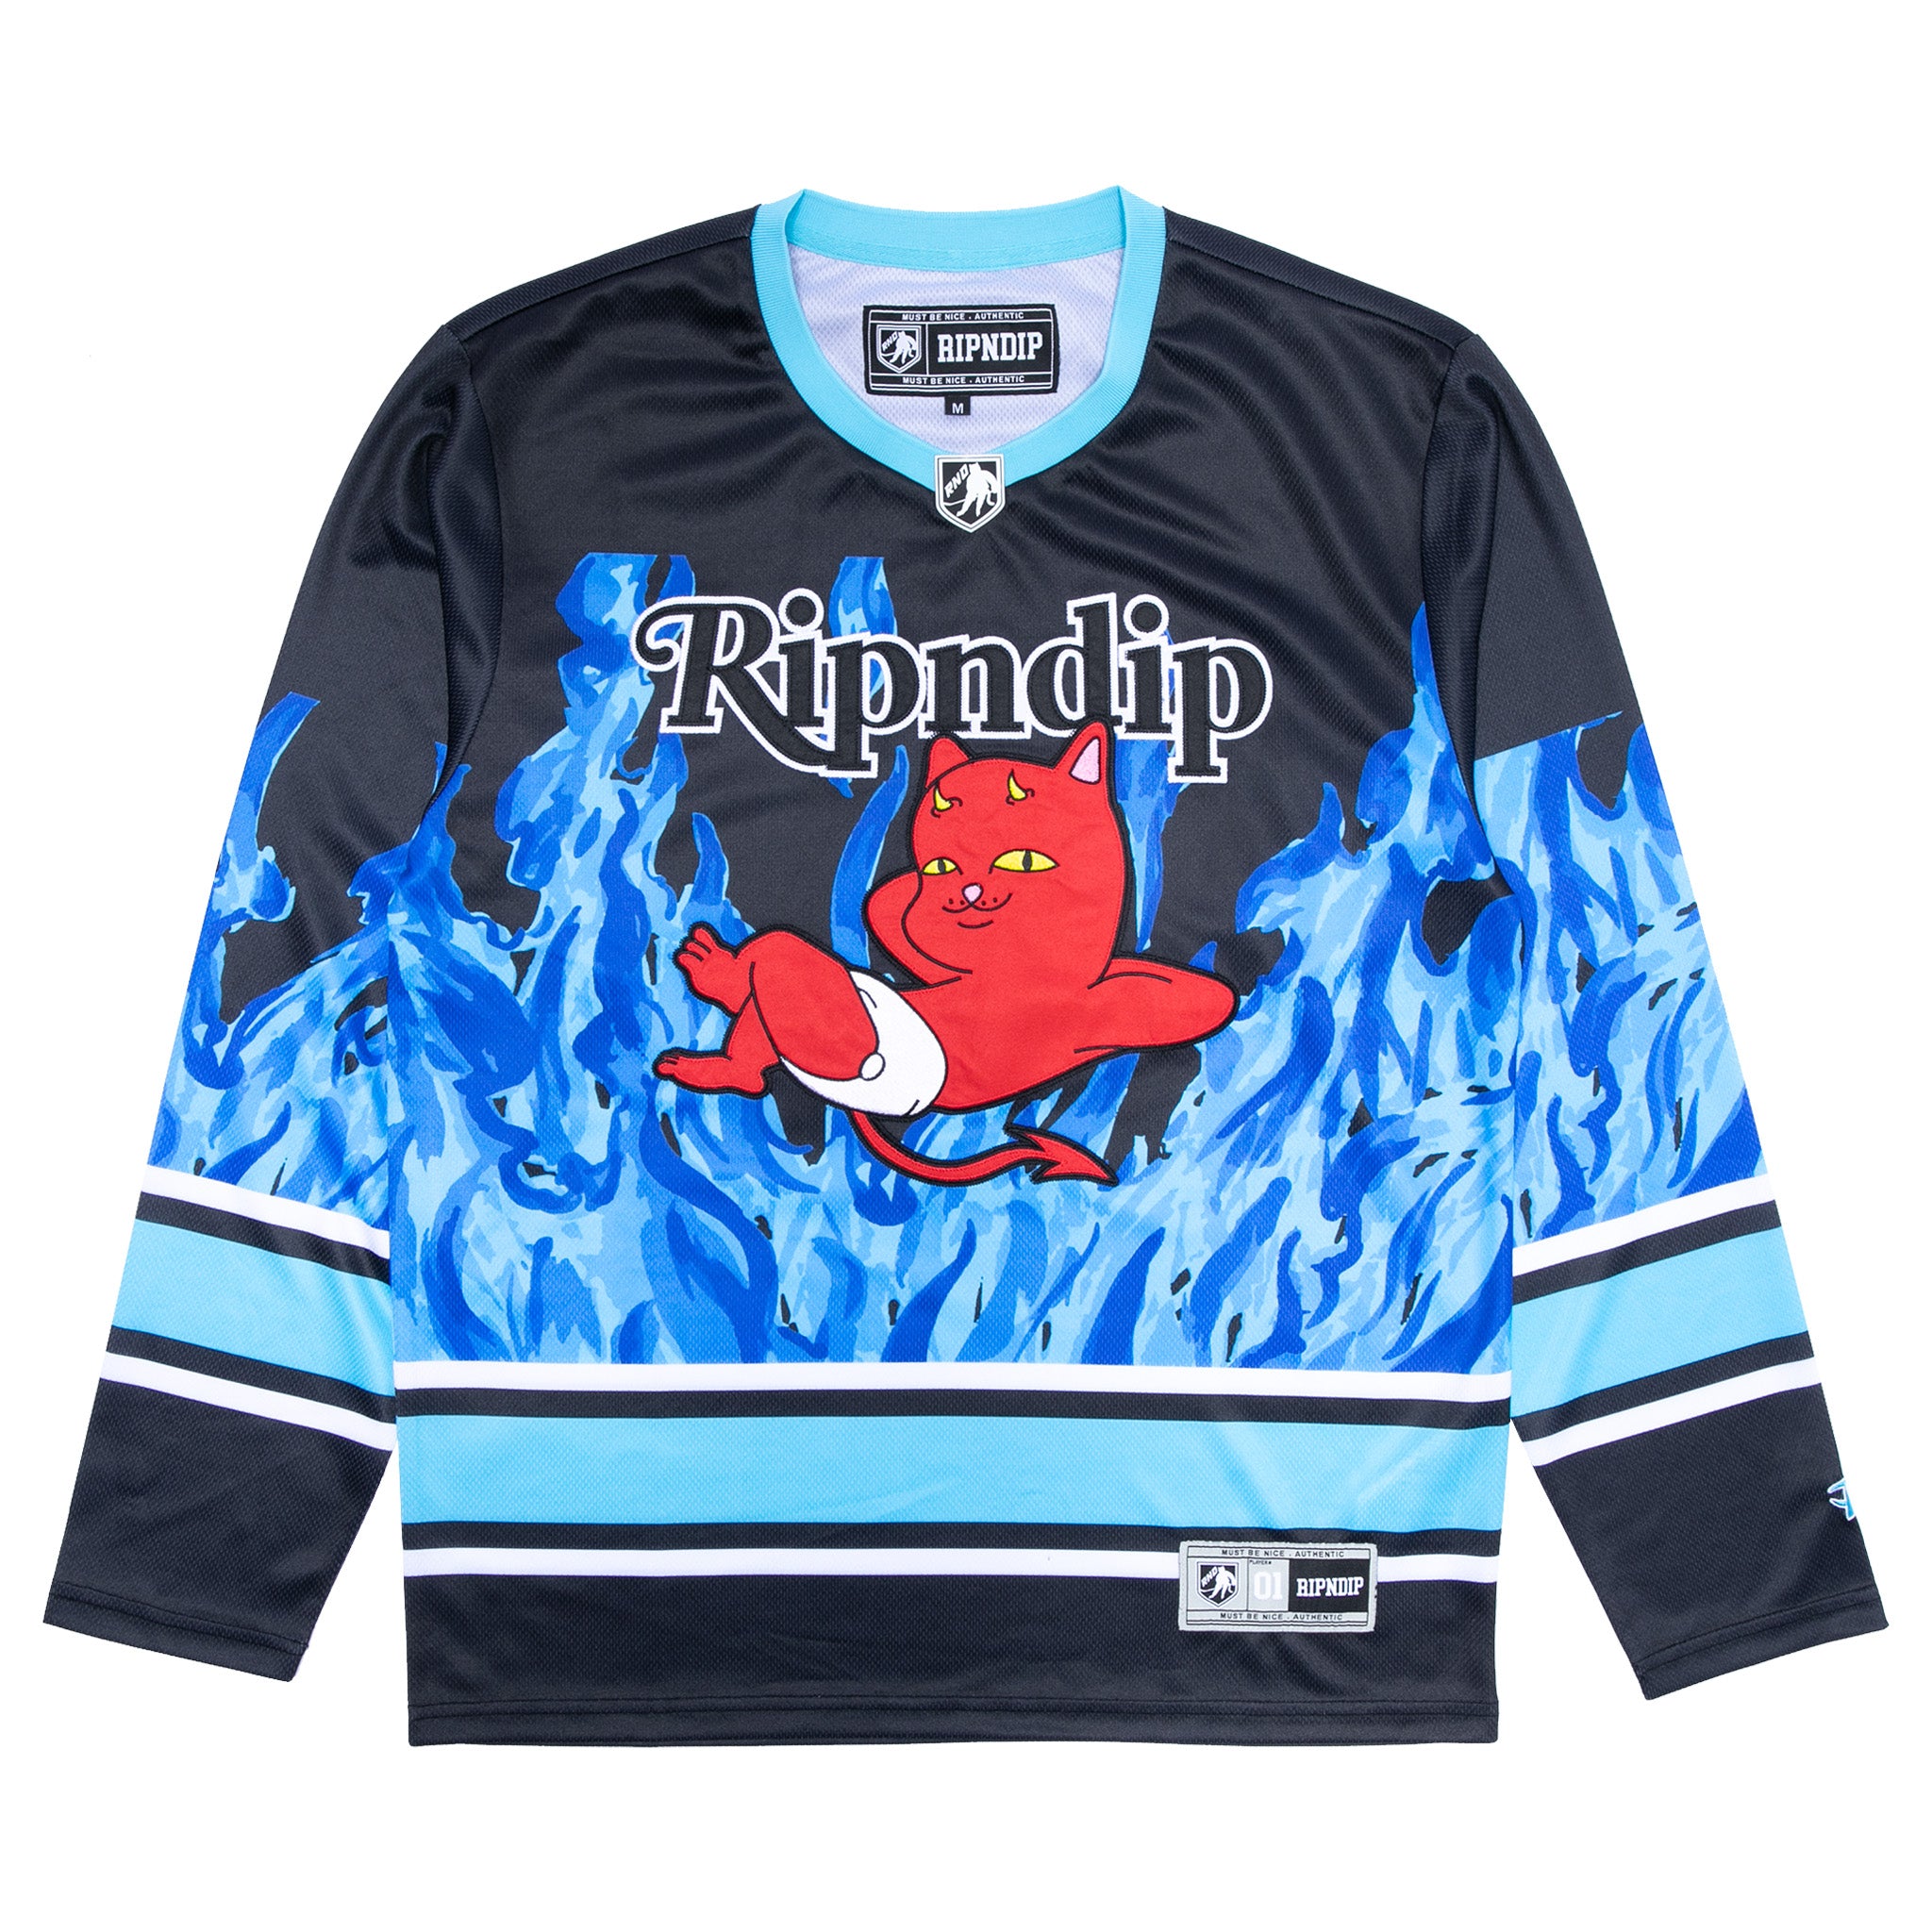 RIPNDIP Devil Baby Black & Blue Hockey Jersey